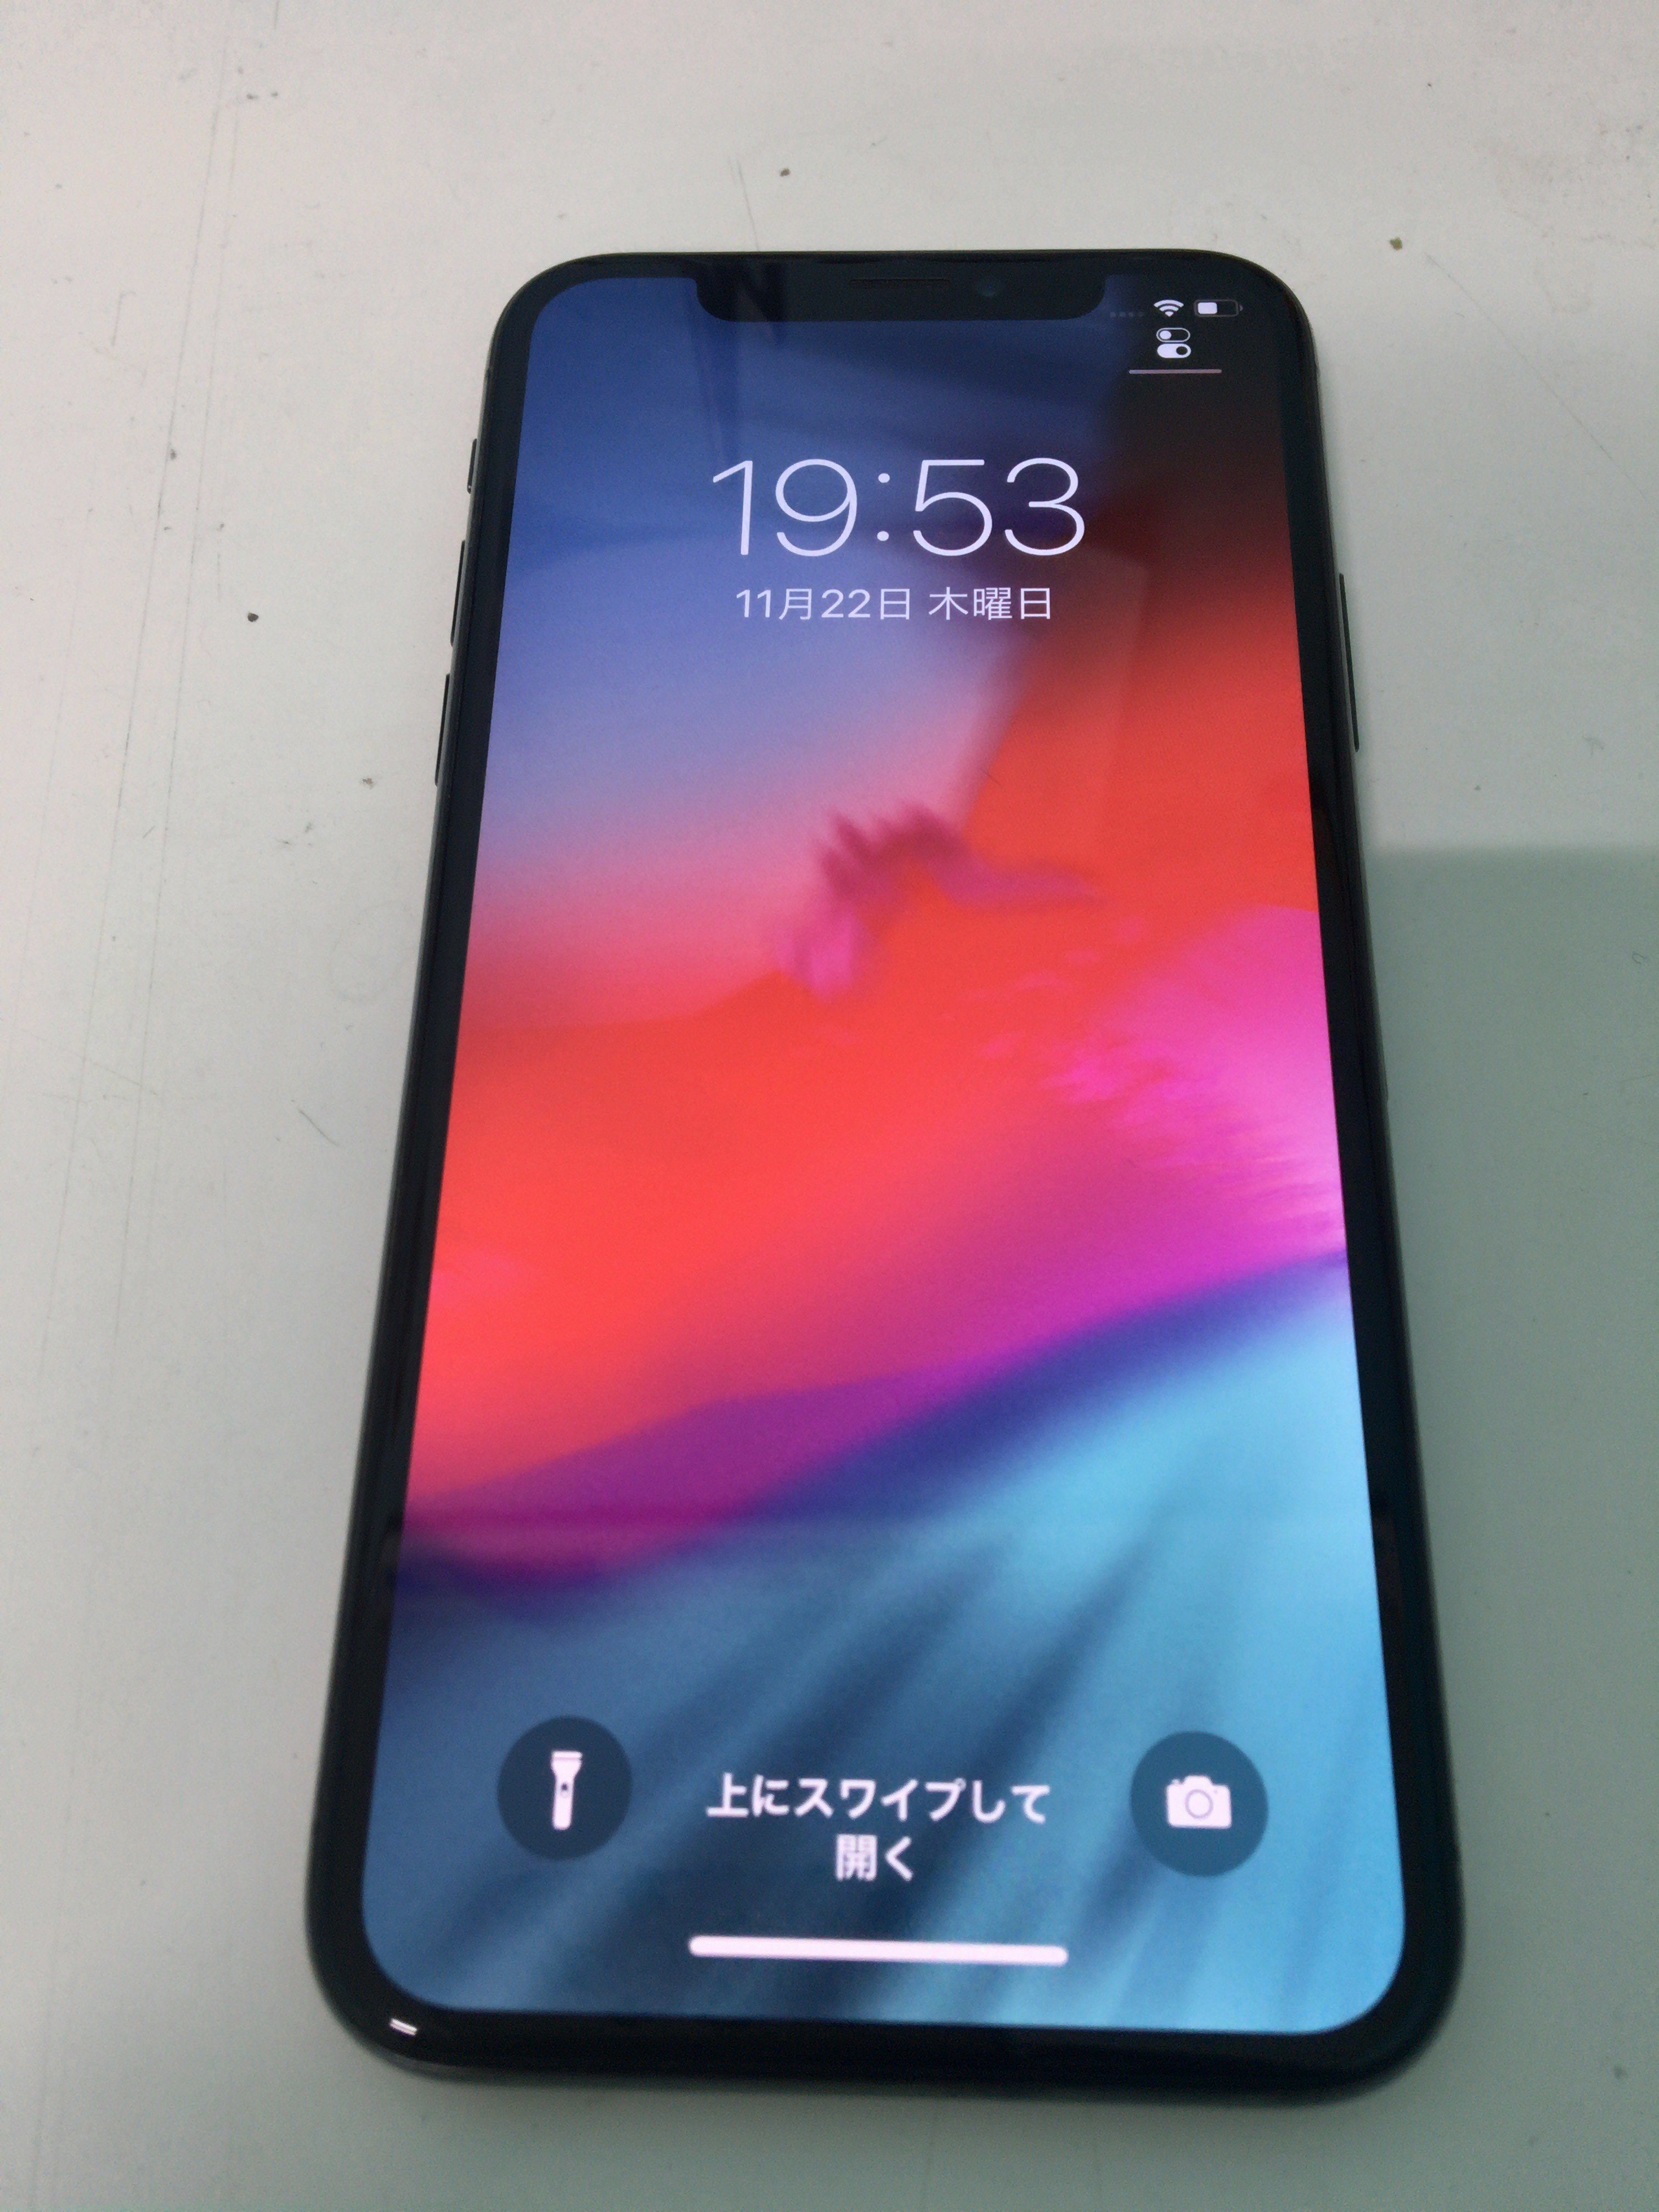 iPhoneX 256GB (au) 中古 ¥45000にて買い取り – 沖縄 iPhone修理 スマイルファクトリー